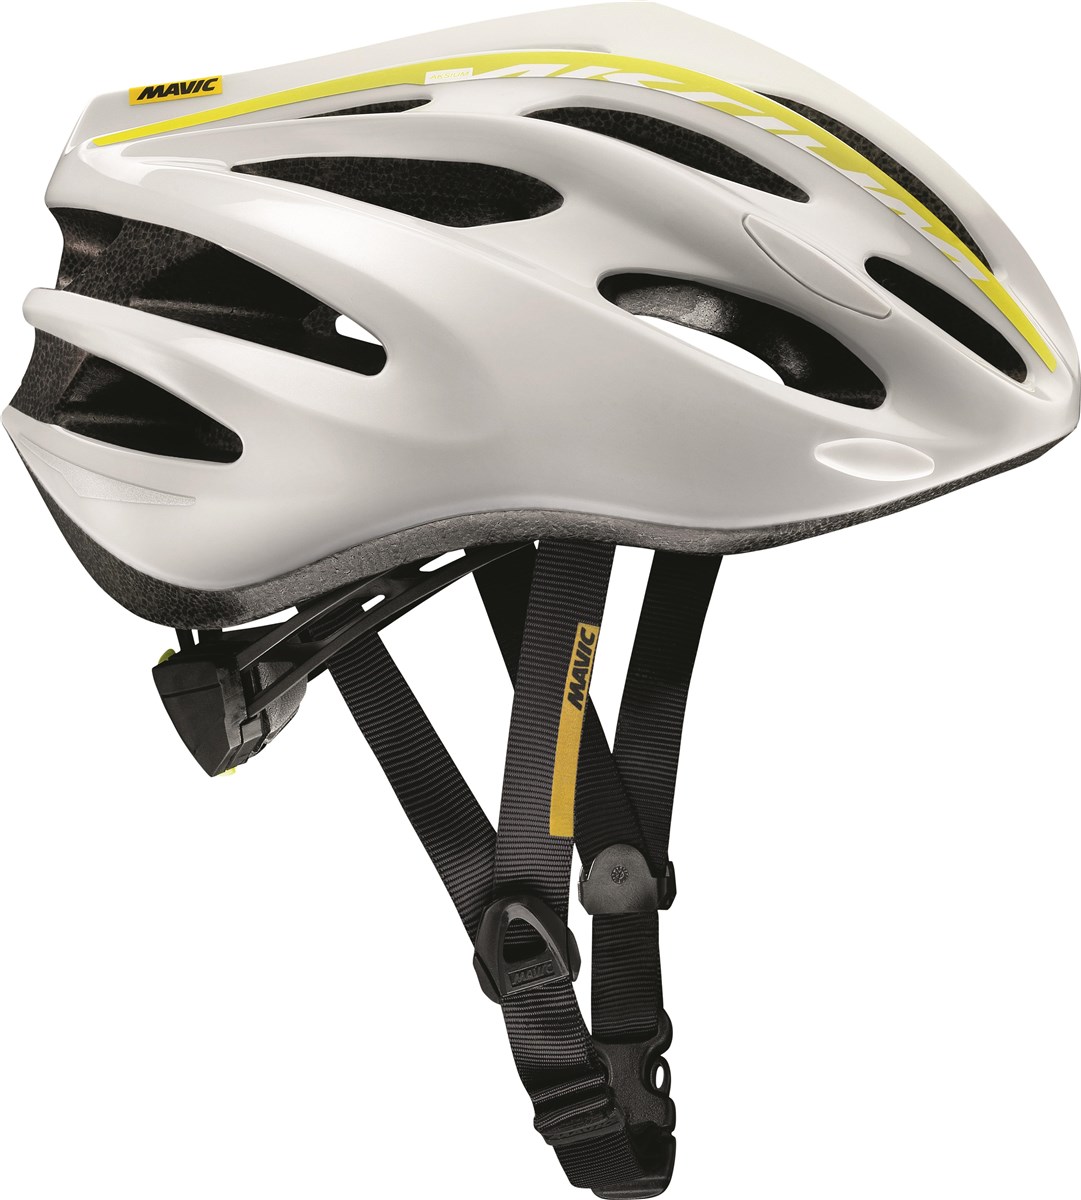 Mavic Aksium Road Cycling Helmet 2017 product image